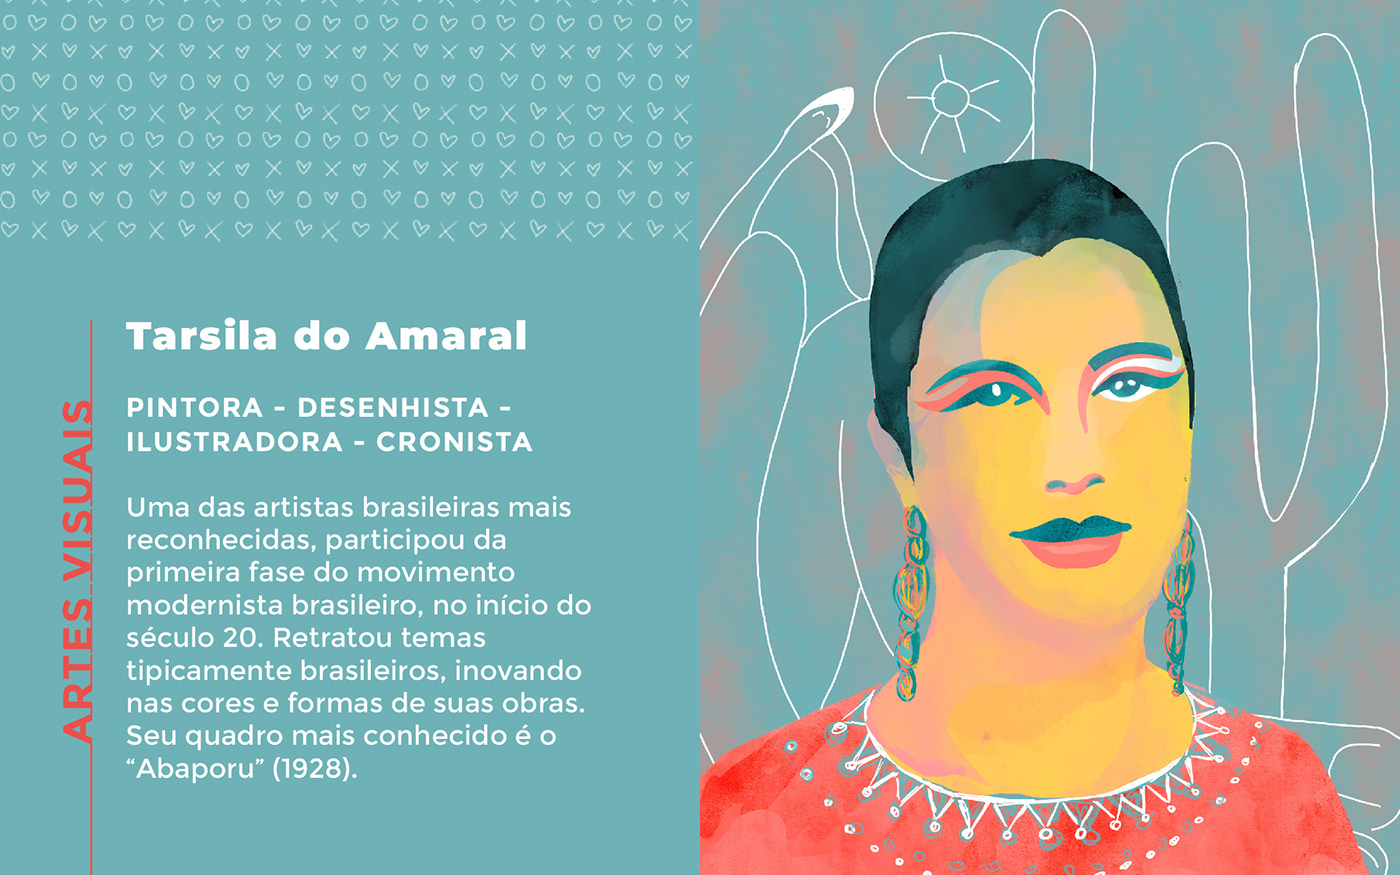 An illustrated portrait of Tarsila do Amaral a famous Brazilian painter.
